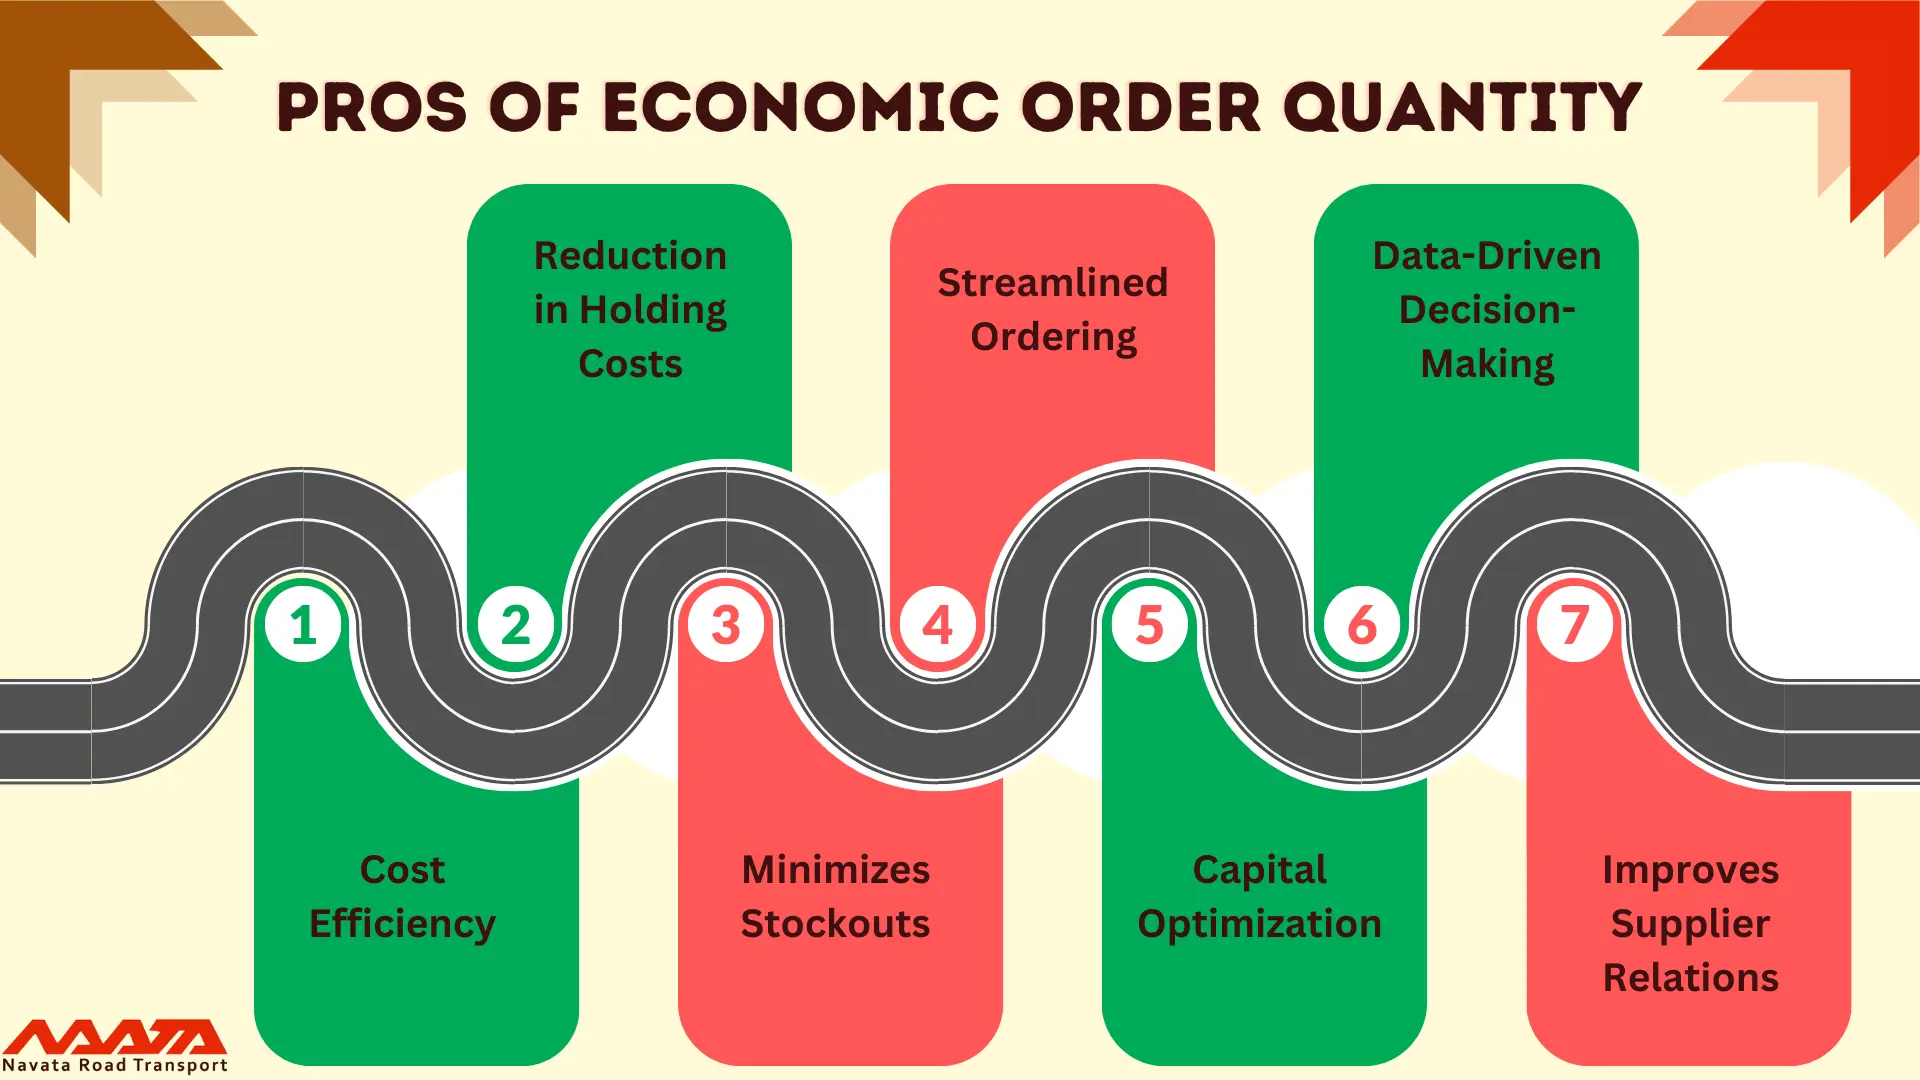 Pros of Economic Order Quantity Inventory Management Work